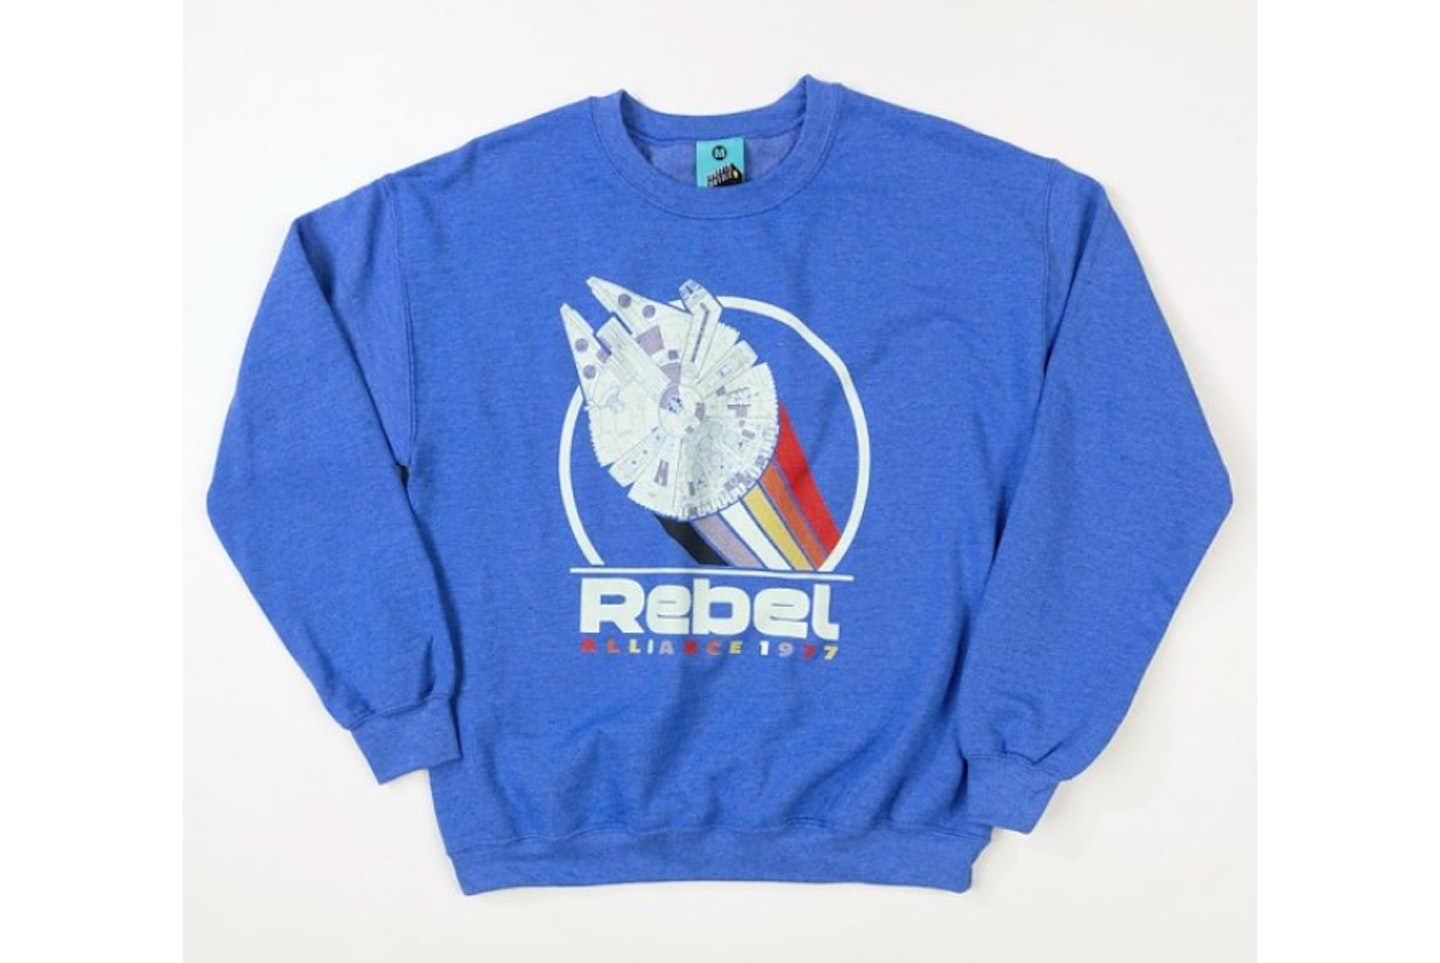 Star Wars Rebel Alliance 1977 Blue Sweater